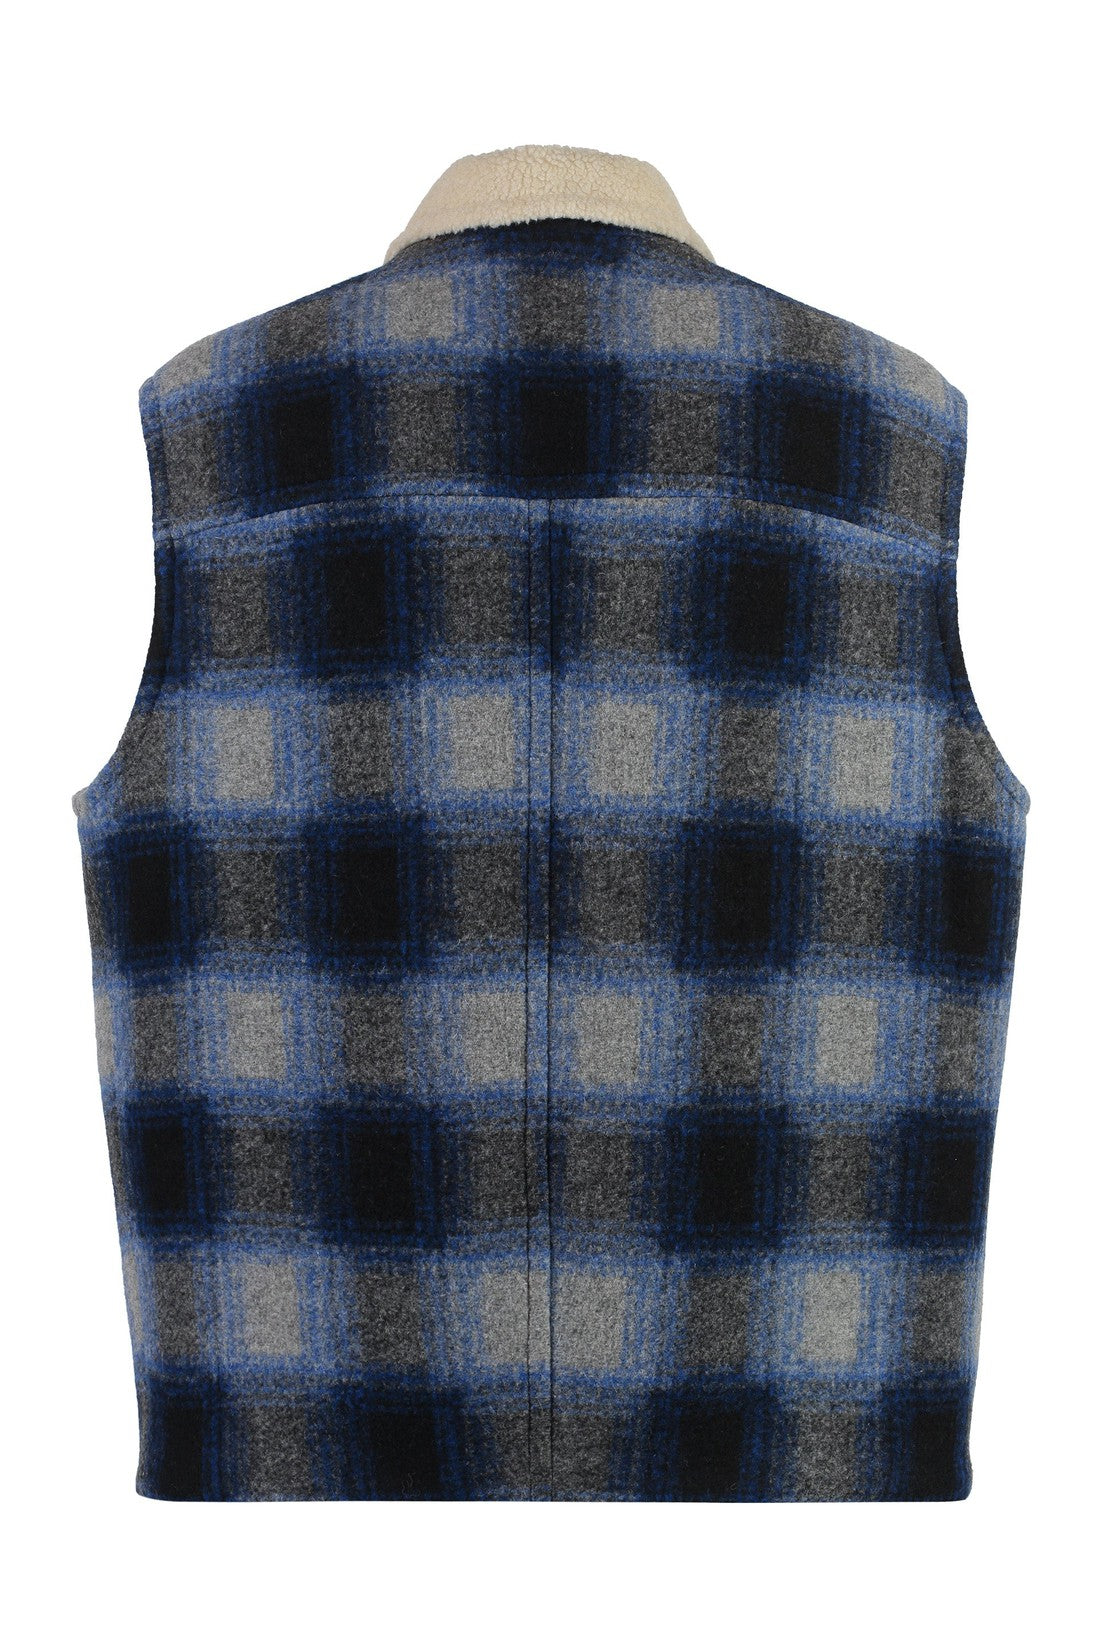 Isabel Marant-OUTLET-SALE-Kiraneo vest with zipper-ARCHIVIST